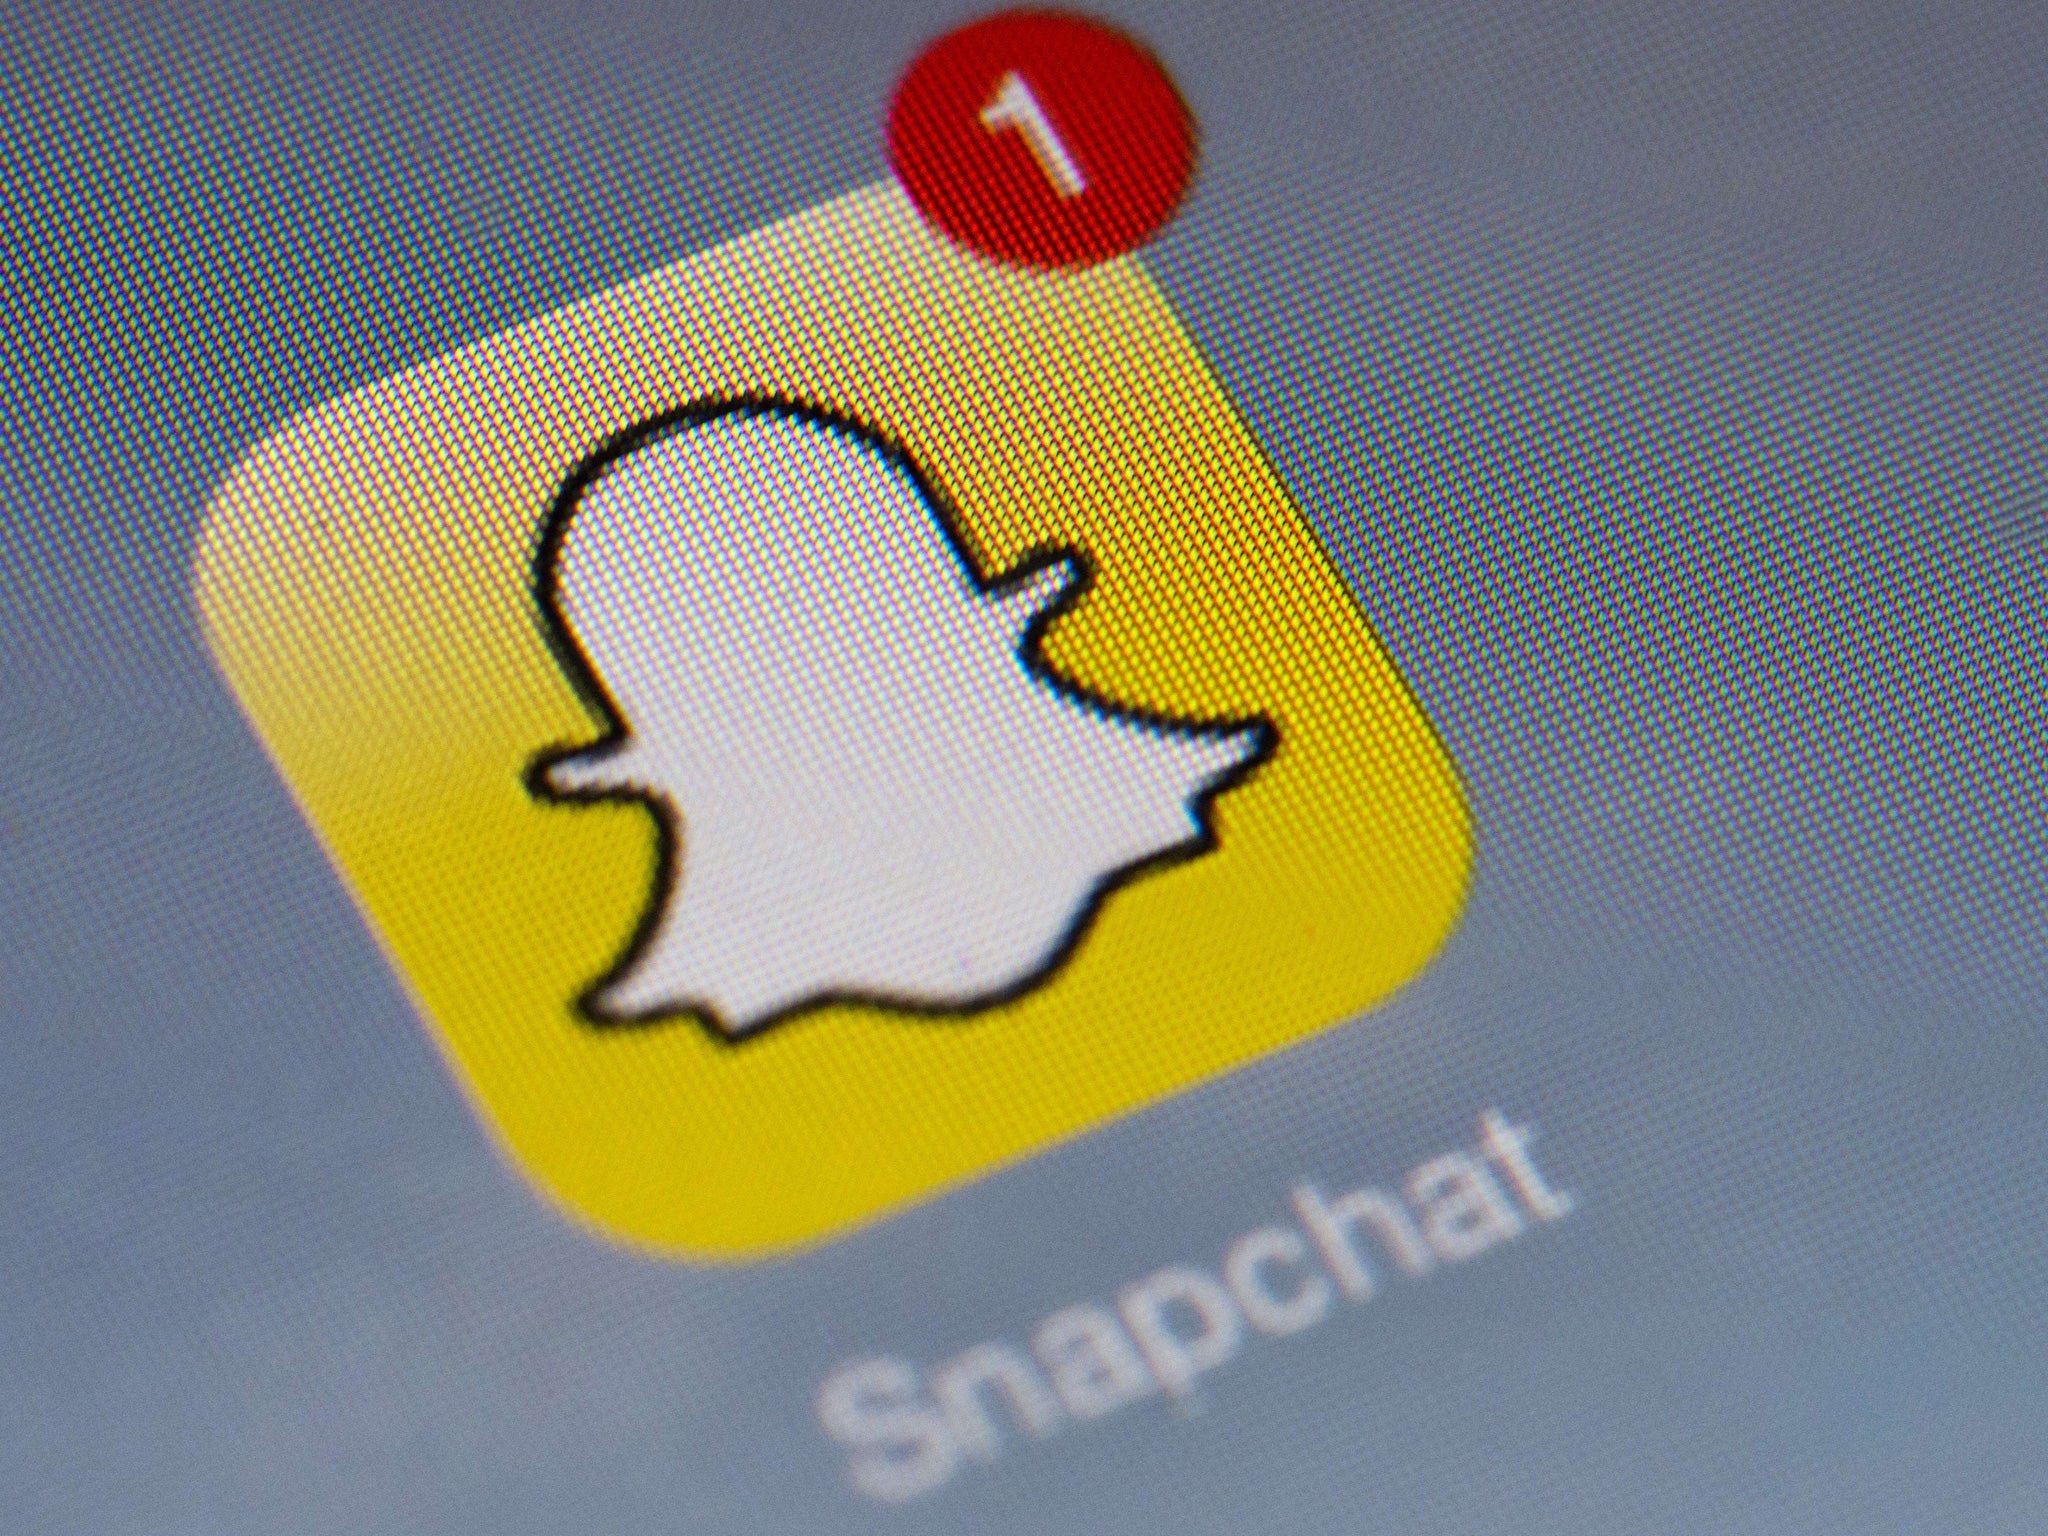 Is Screenshotting Snapchat illegal?